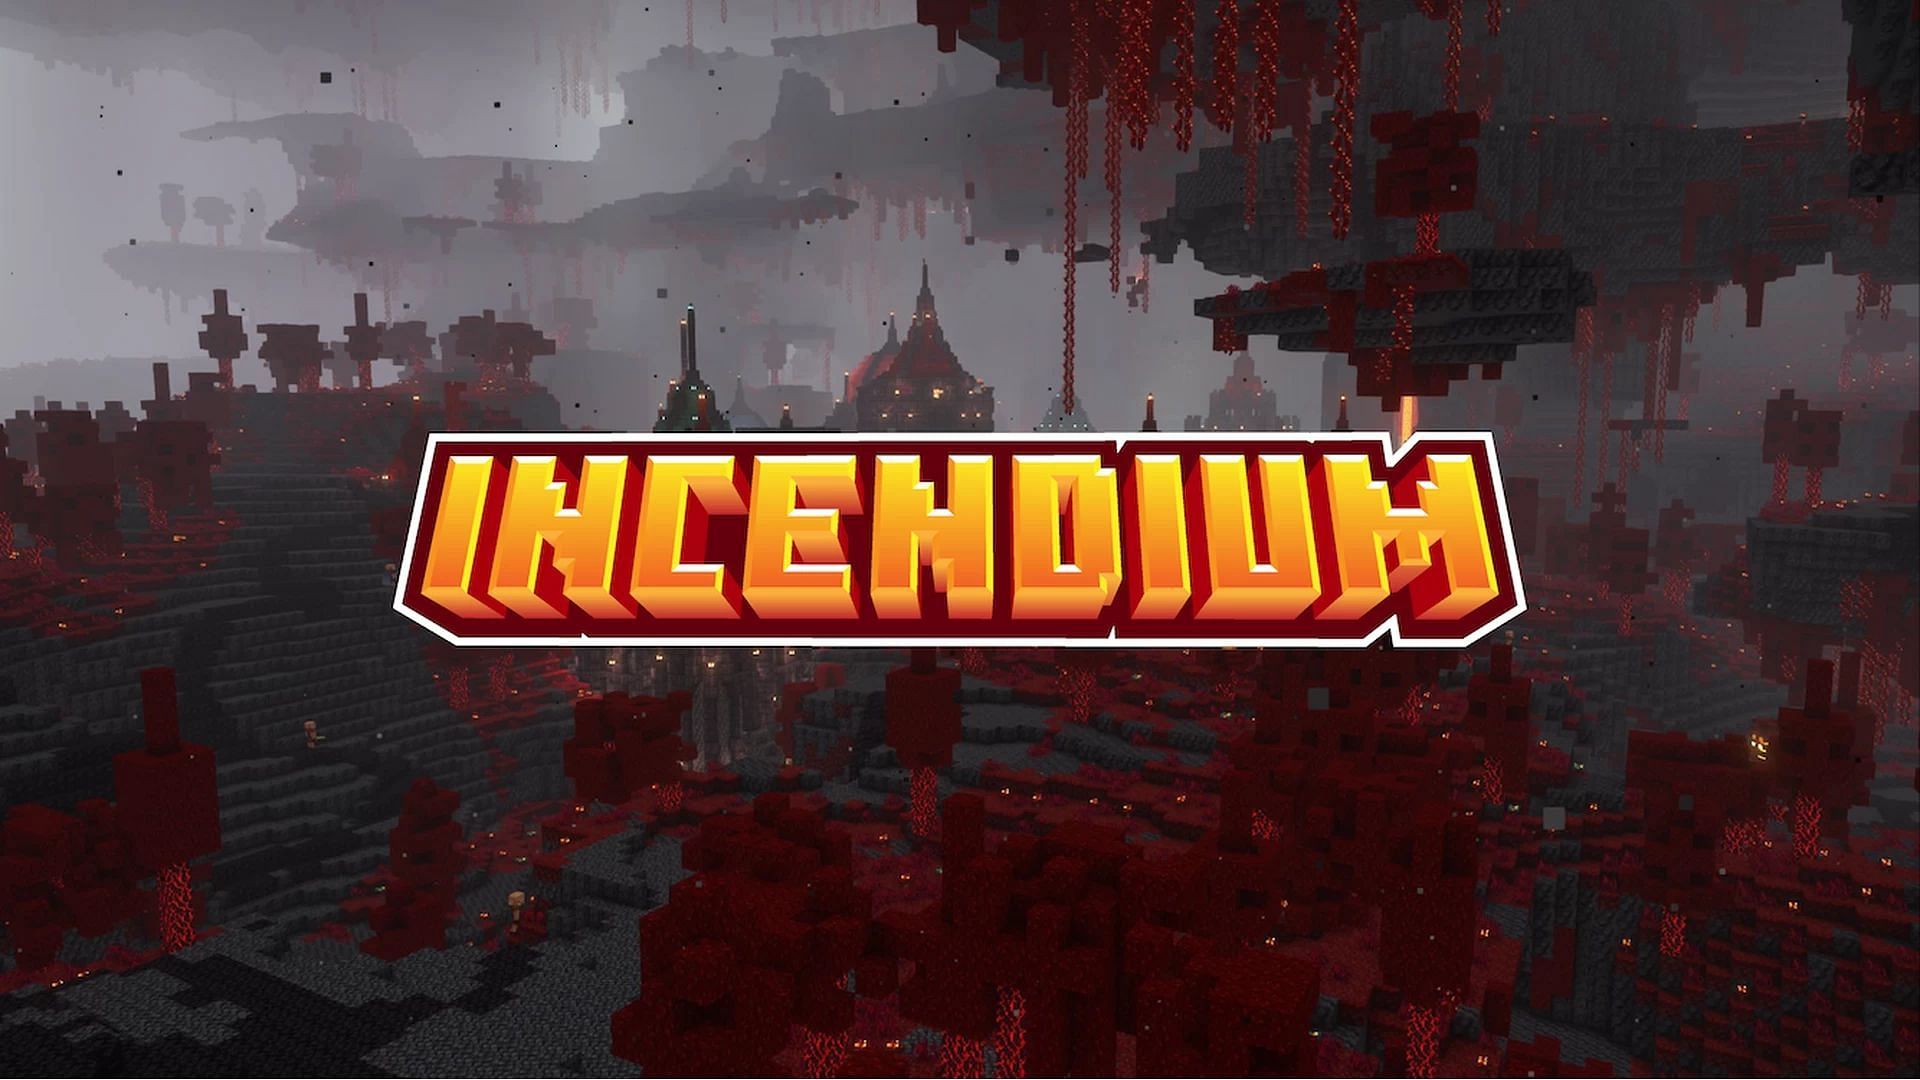 The Incendium title image (Image via planetminecraft.com)